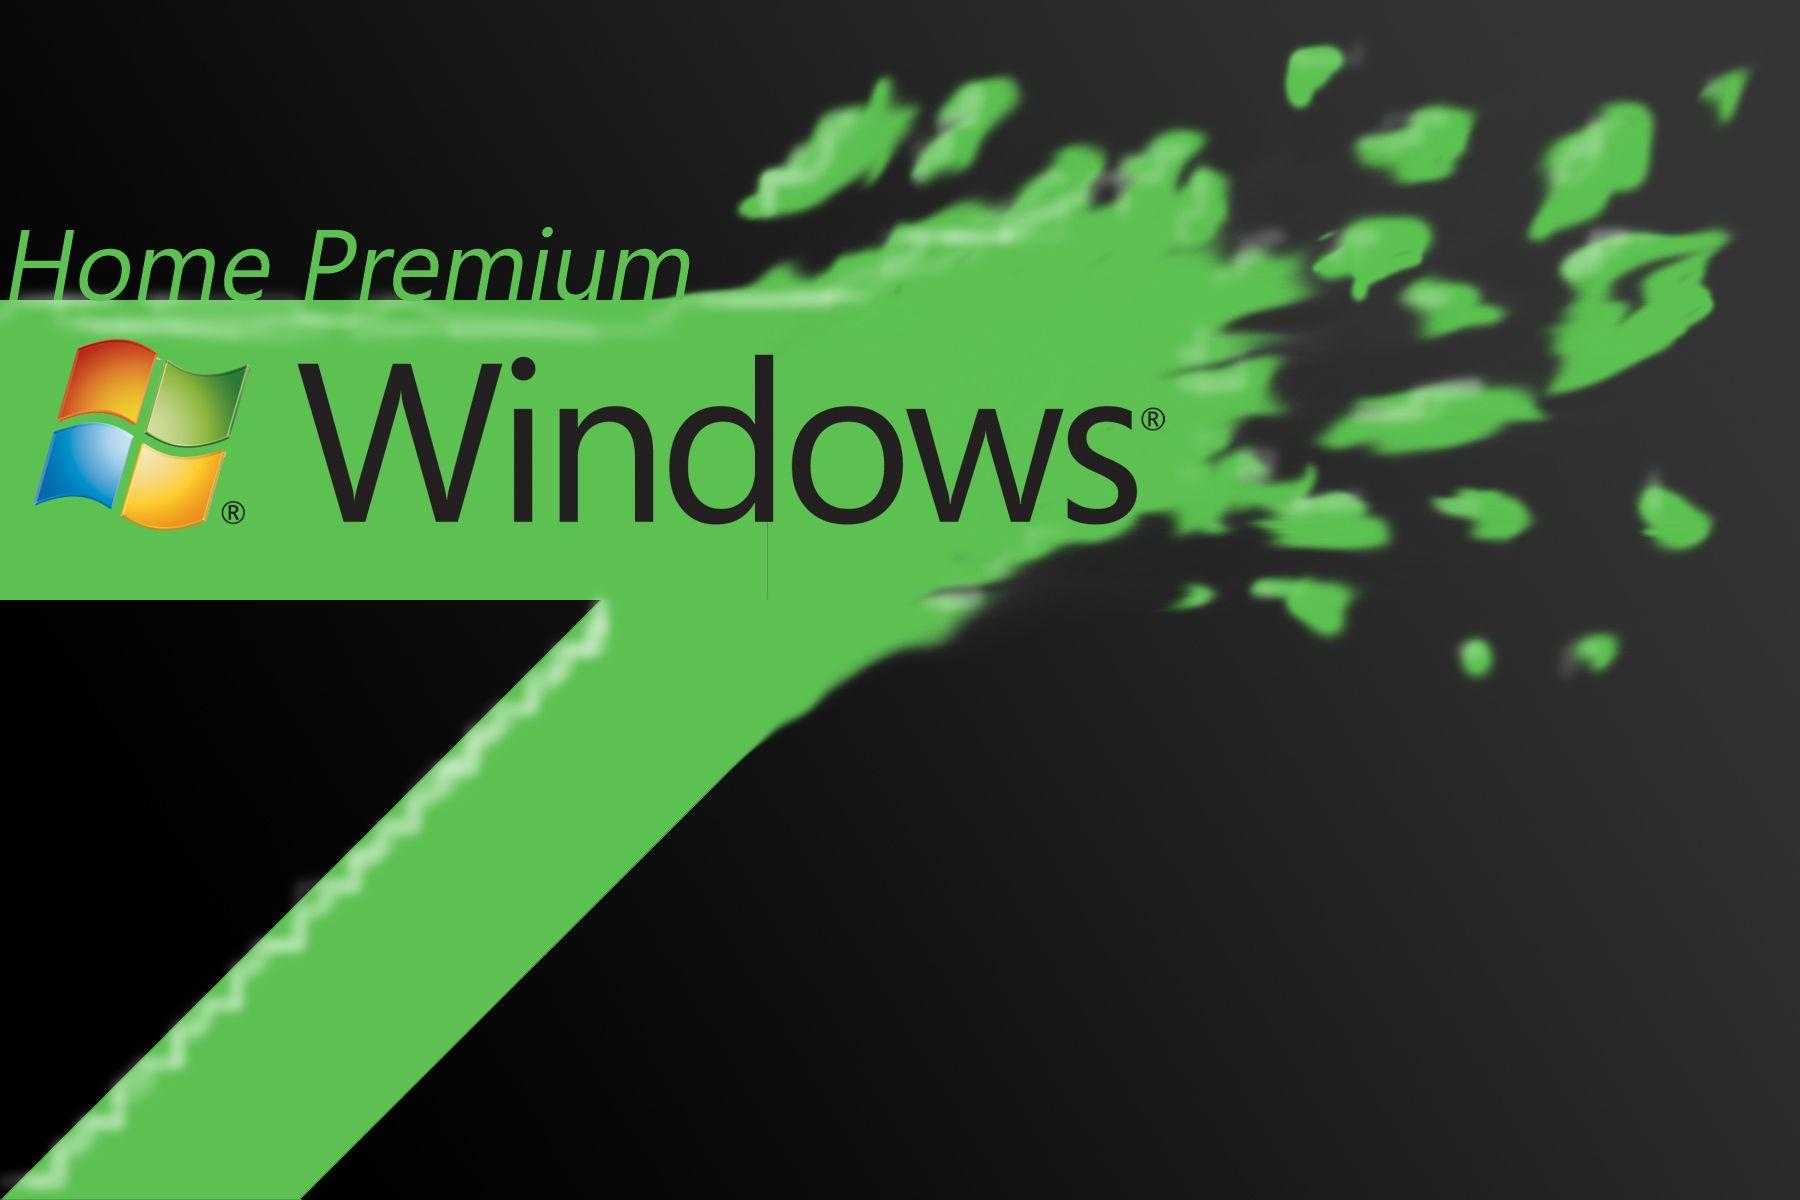 Free Wallpaper Windows 7 Home Premium